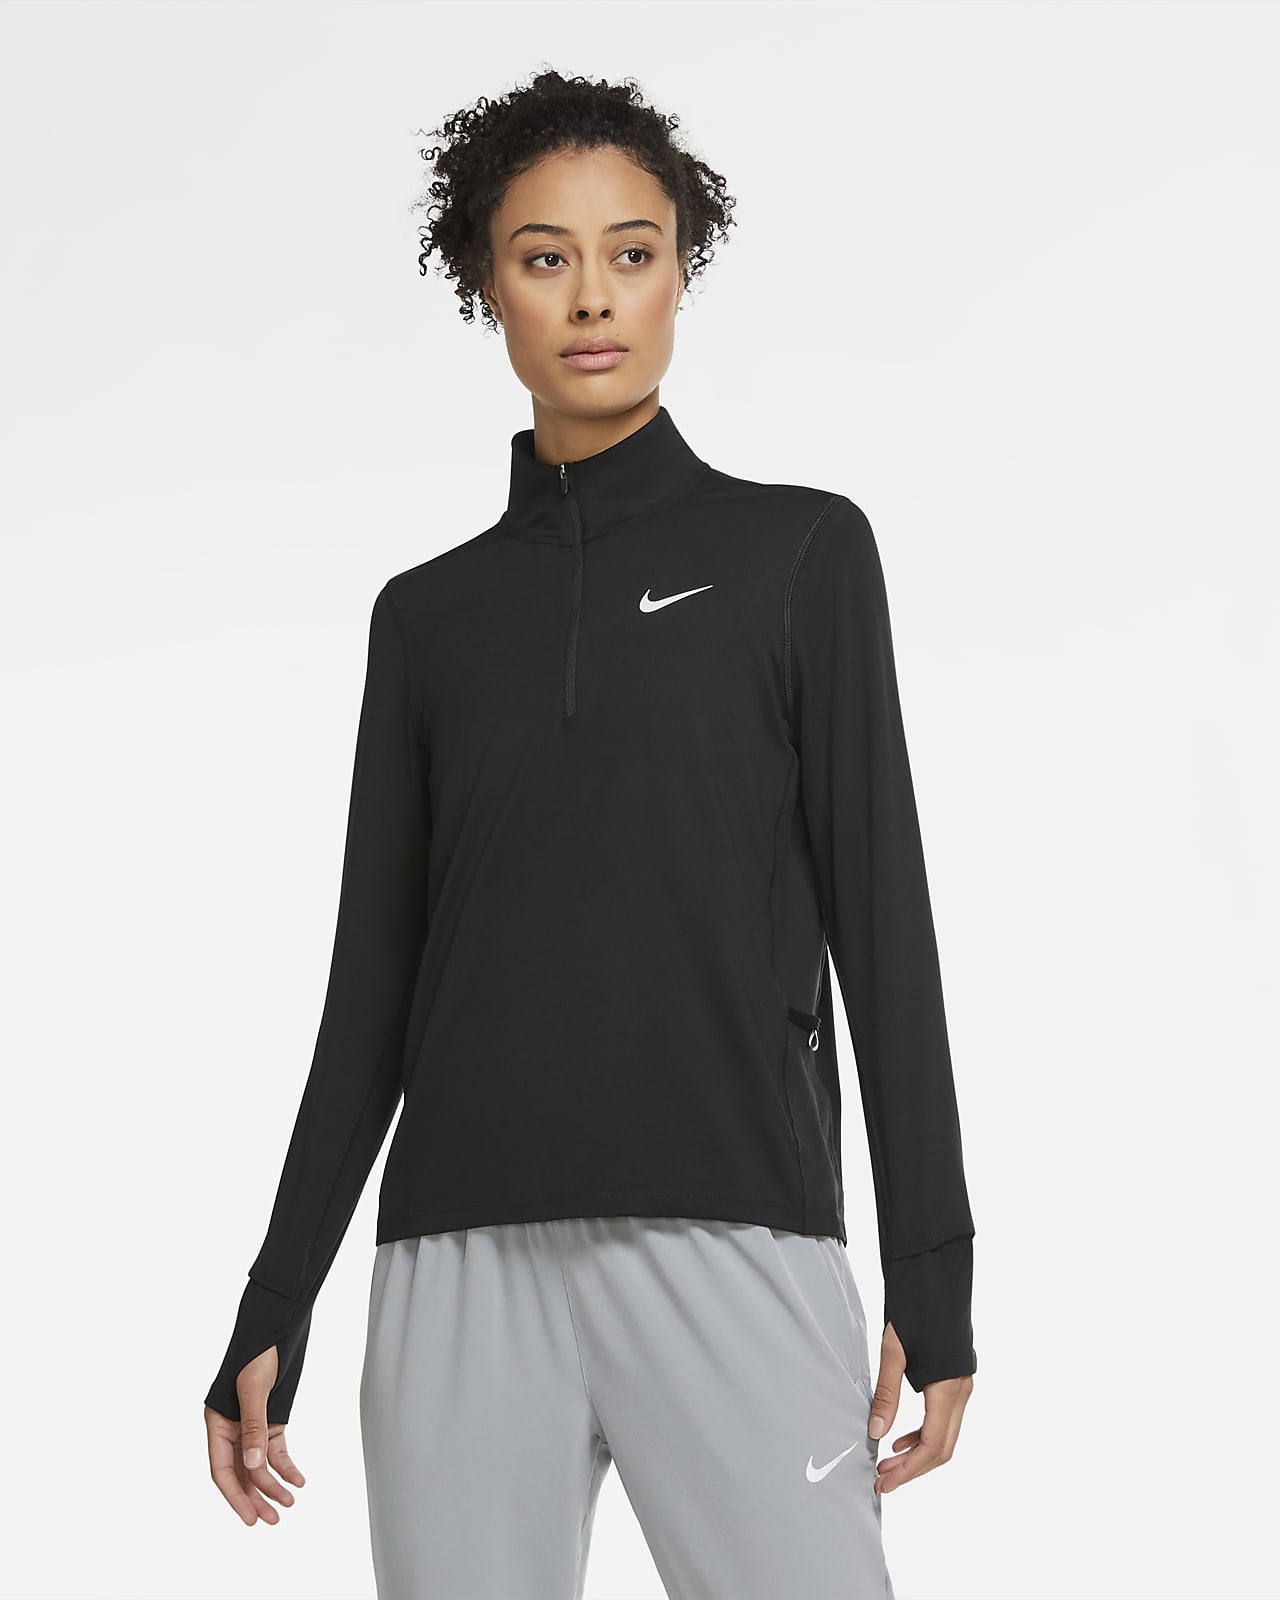 Nike de running media cremallera - Mujer. Nike